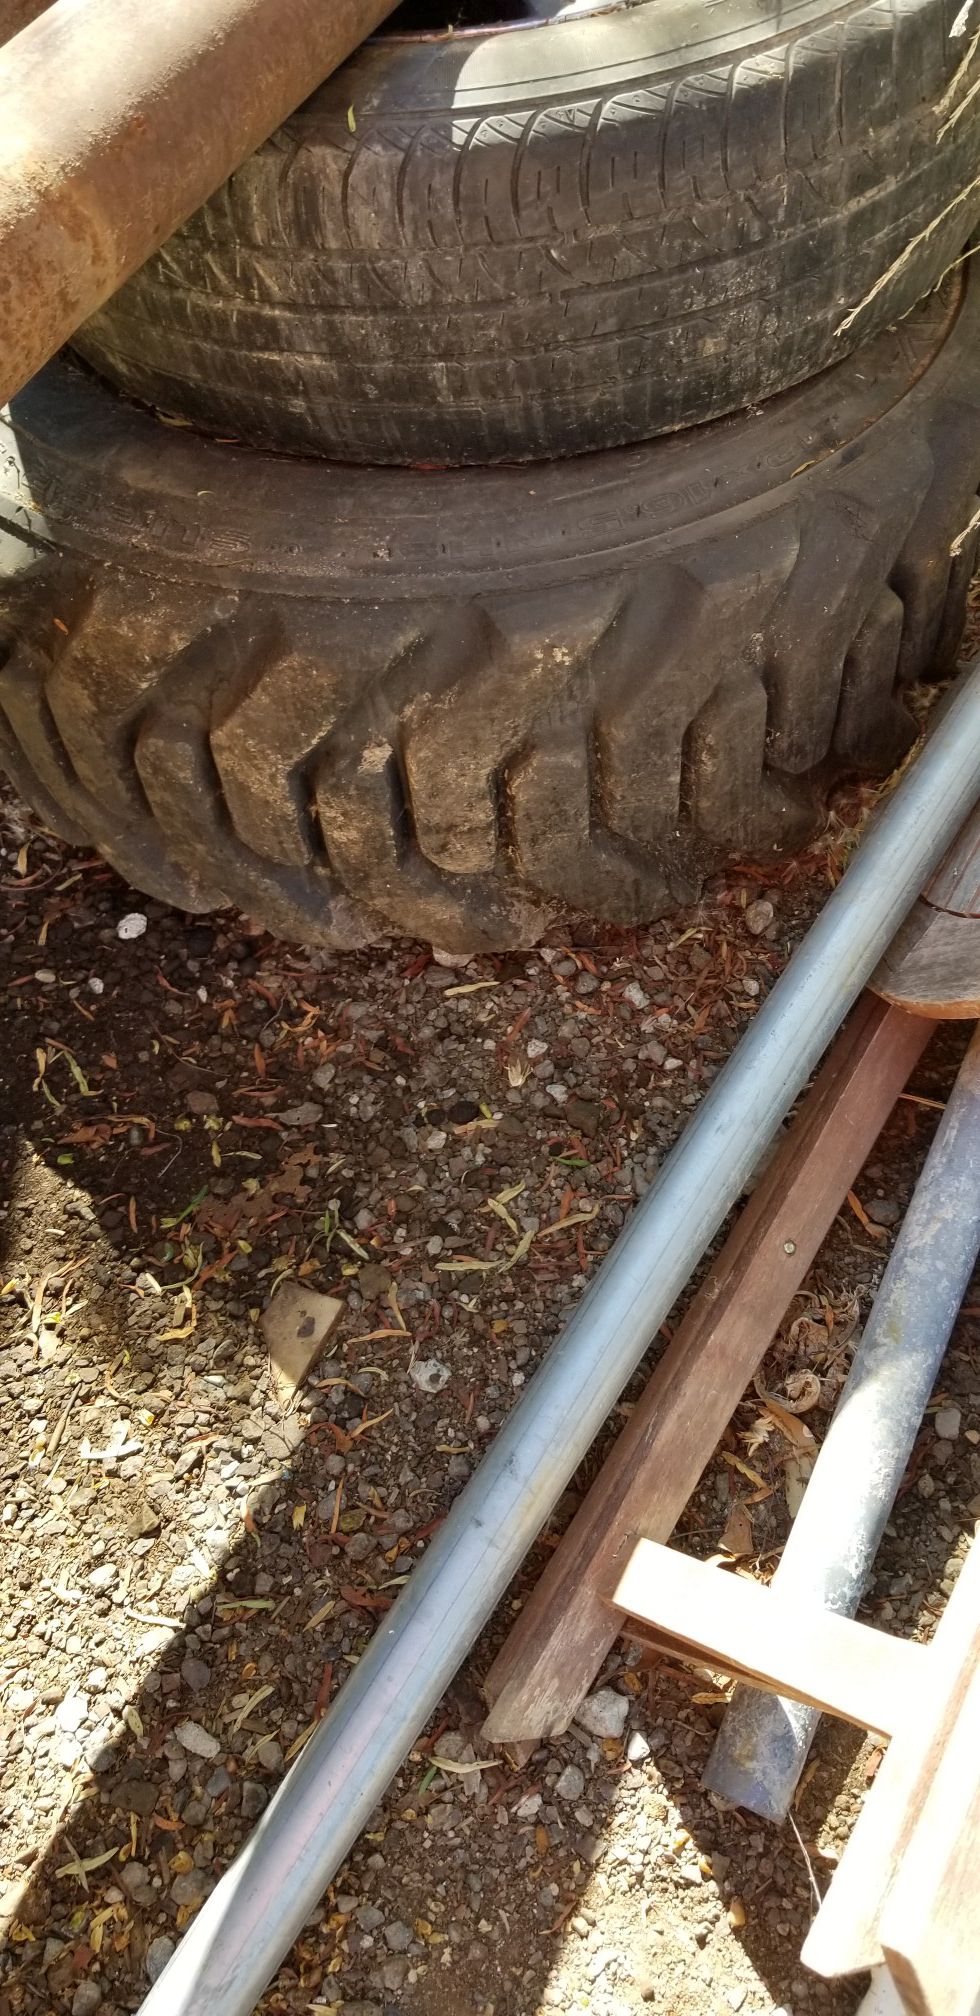 Skid steer tractor tire